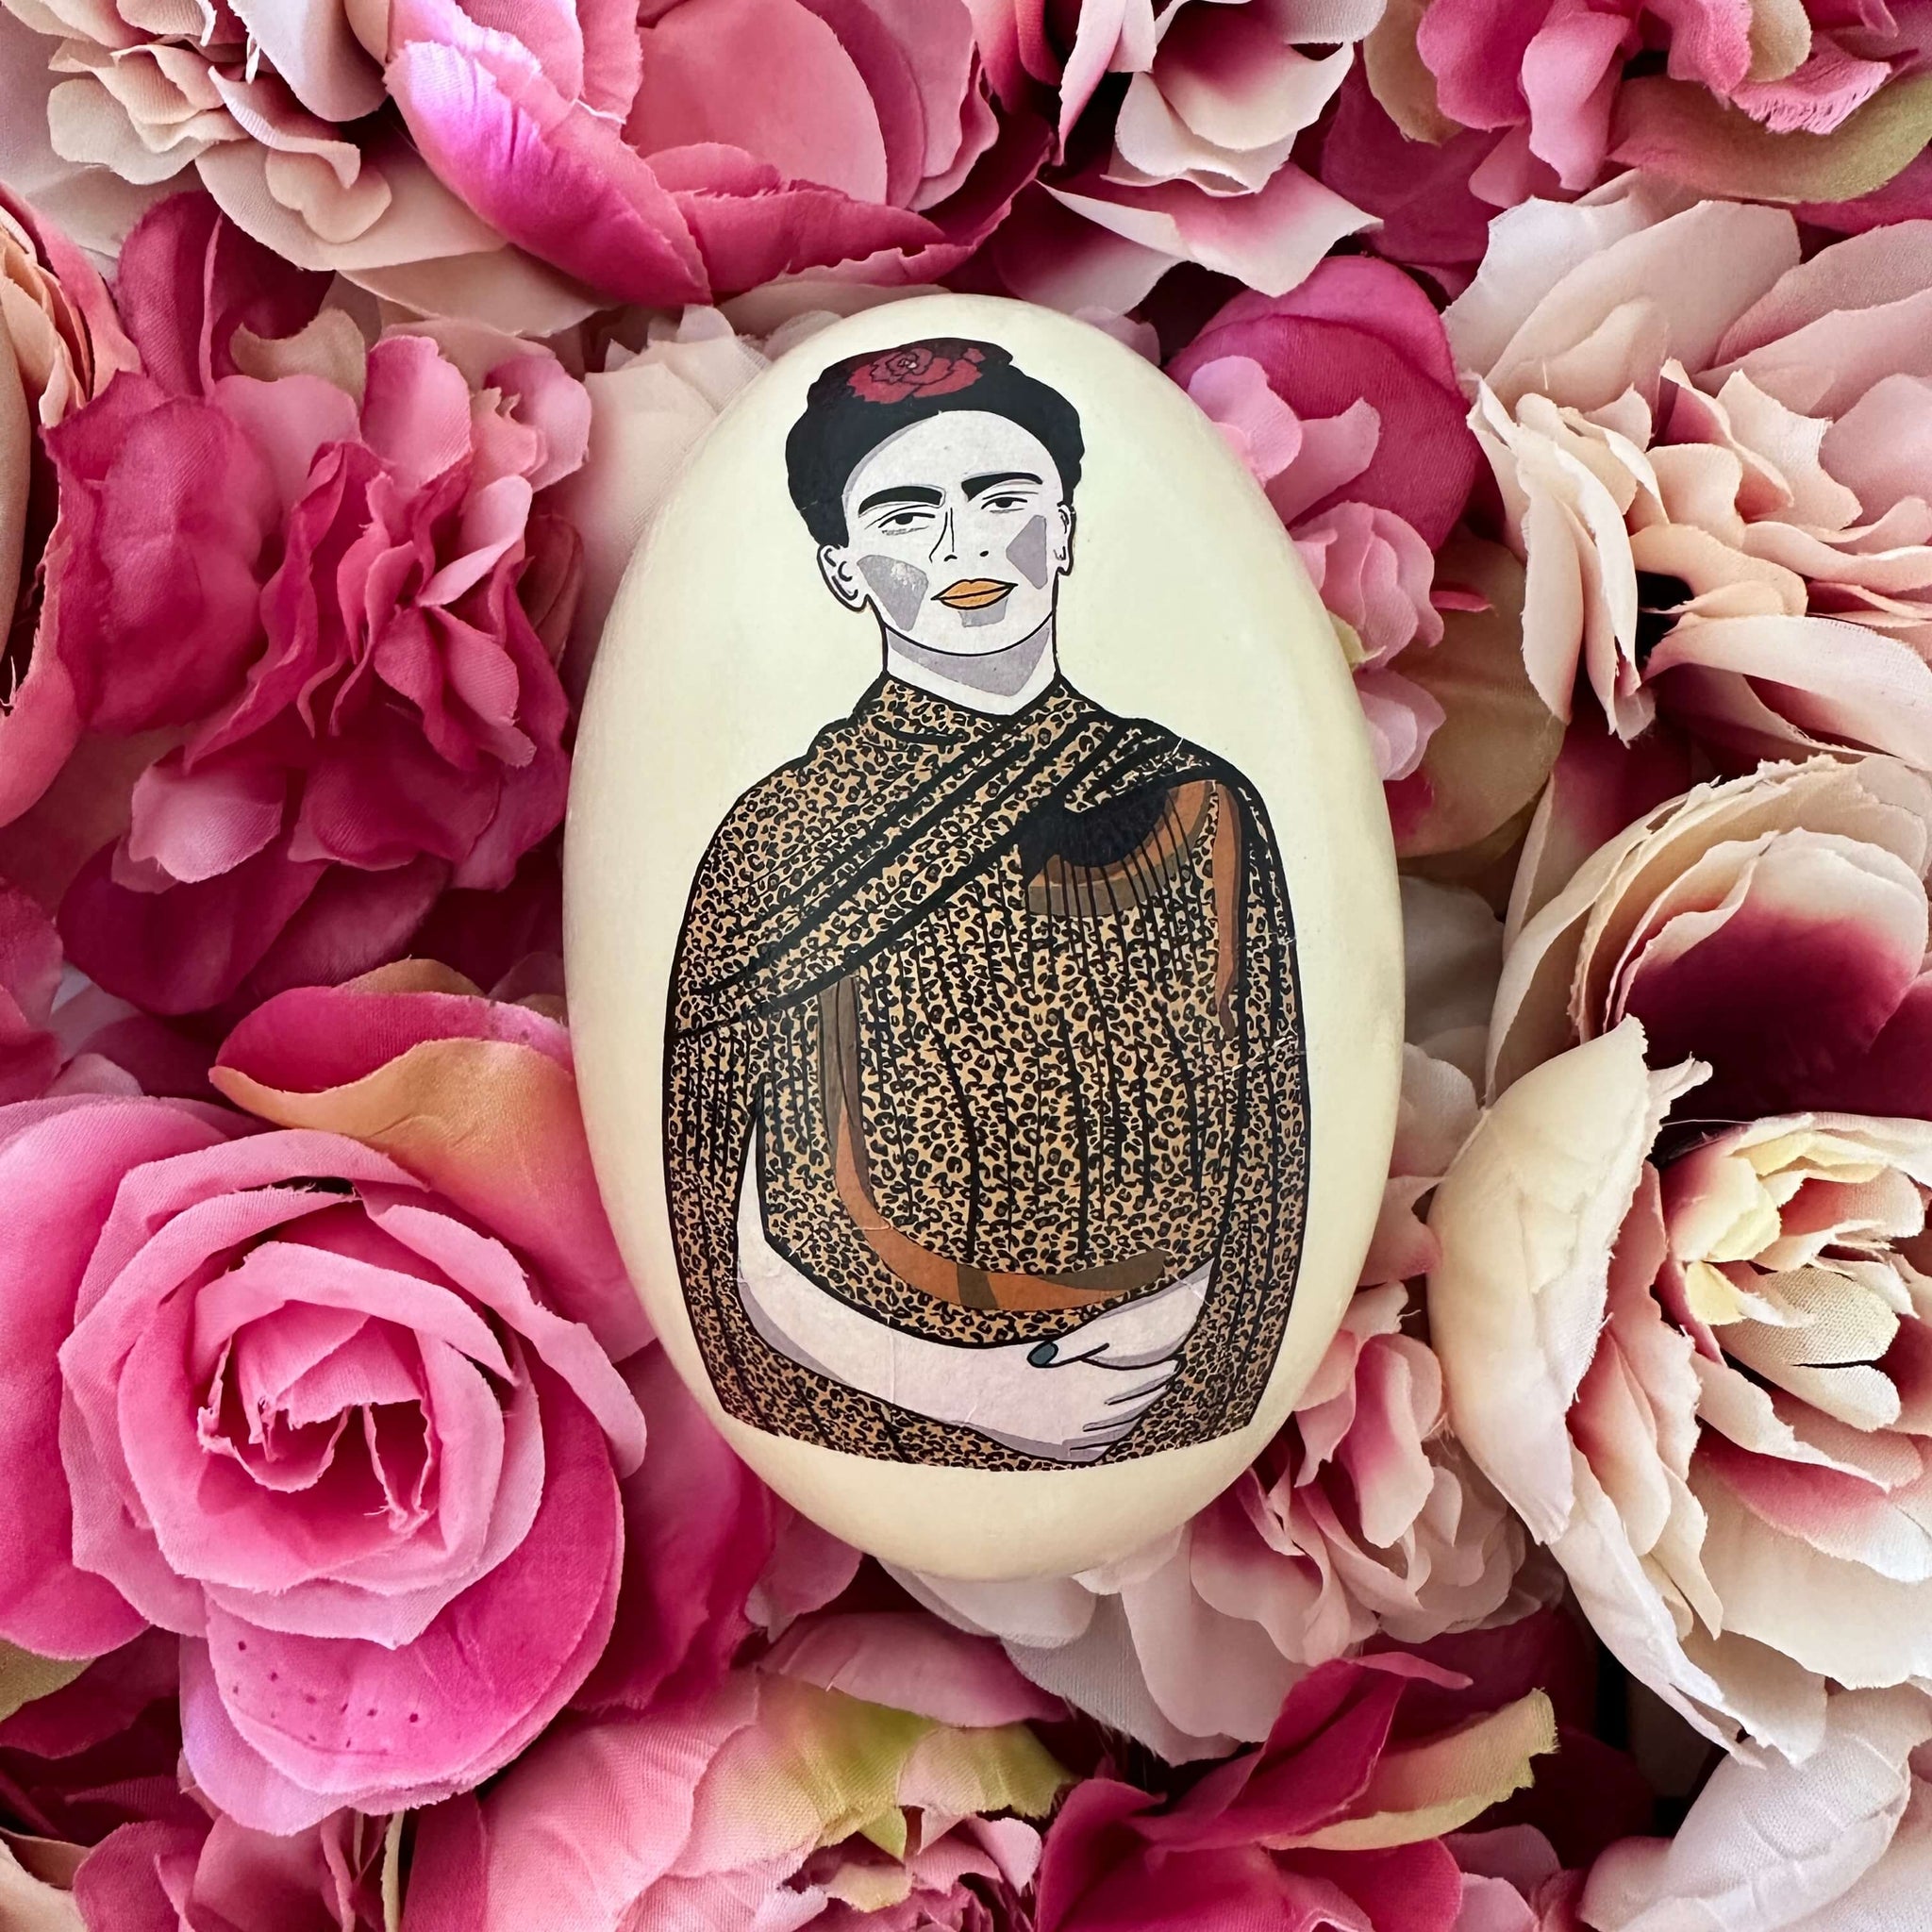 Ei-nzigartig Straußenei Frida Kahlo